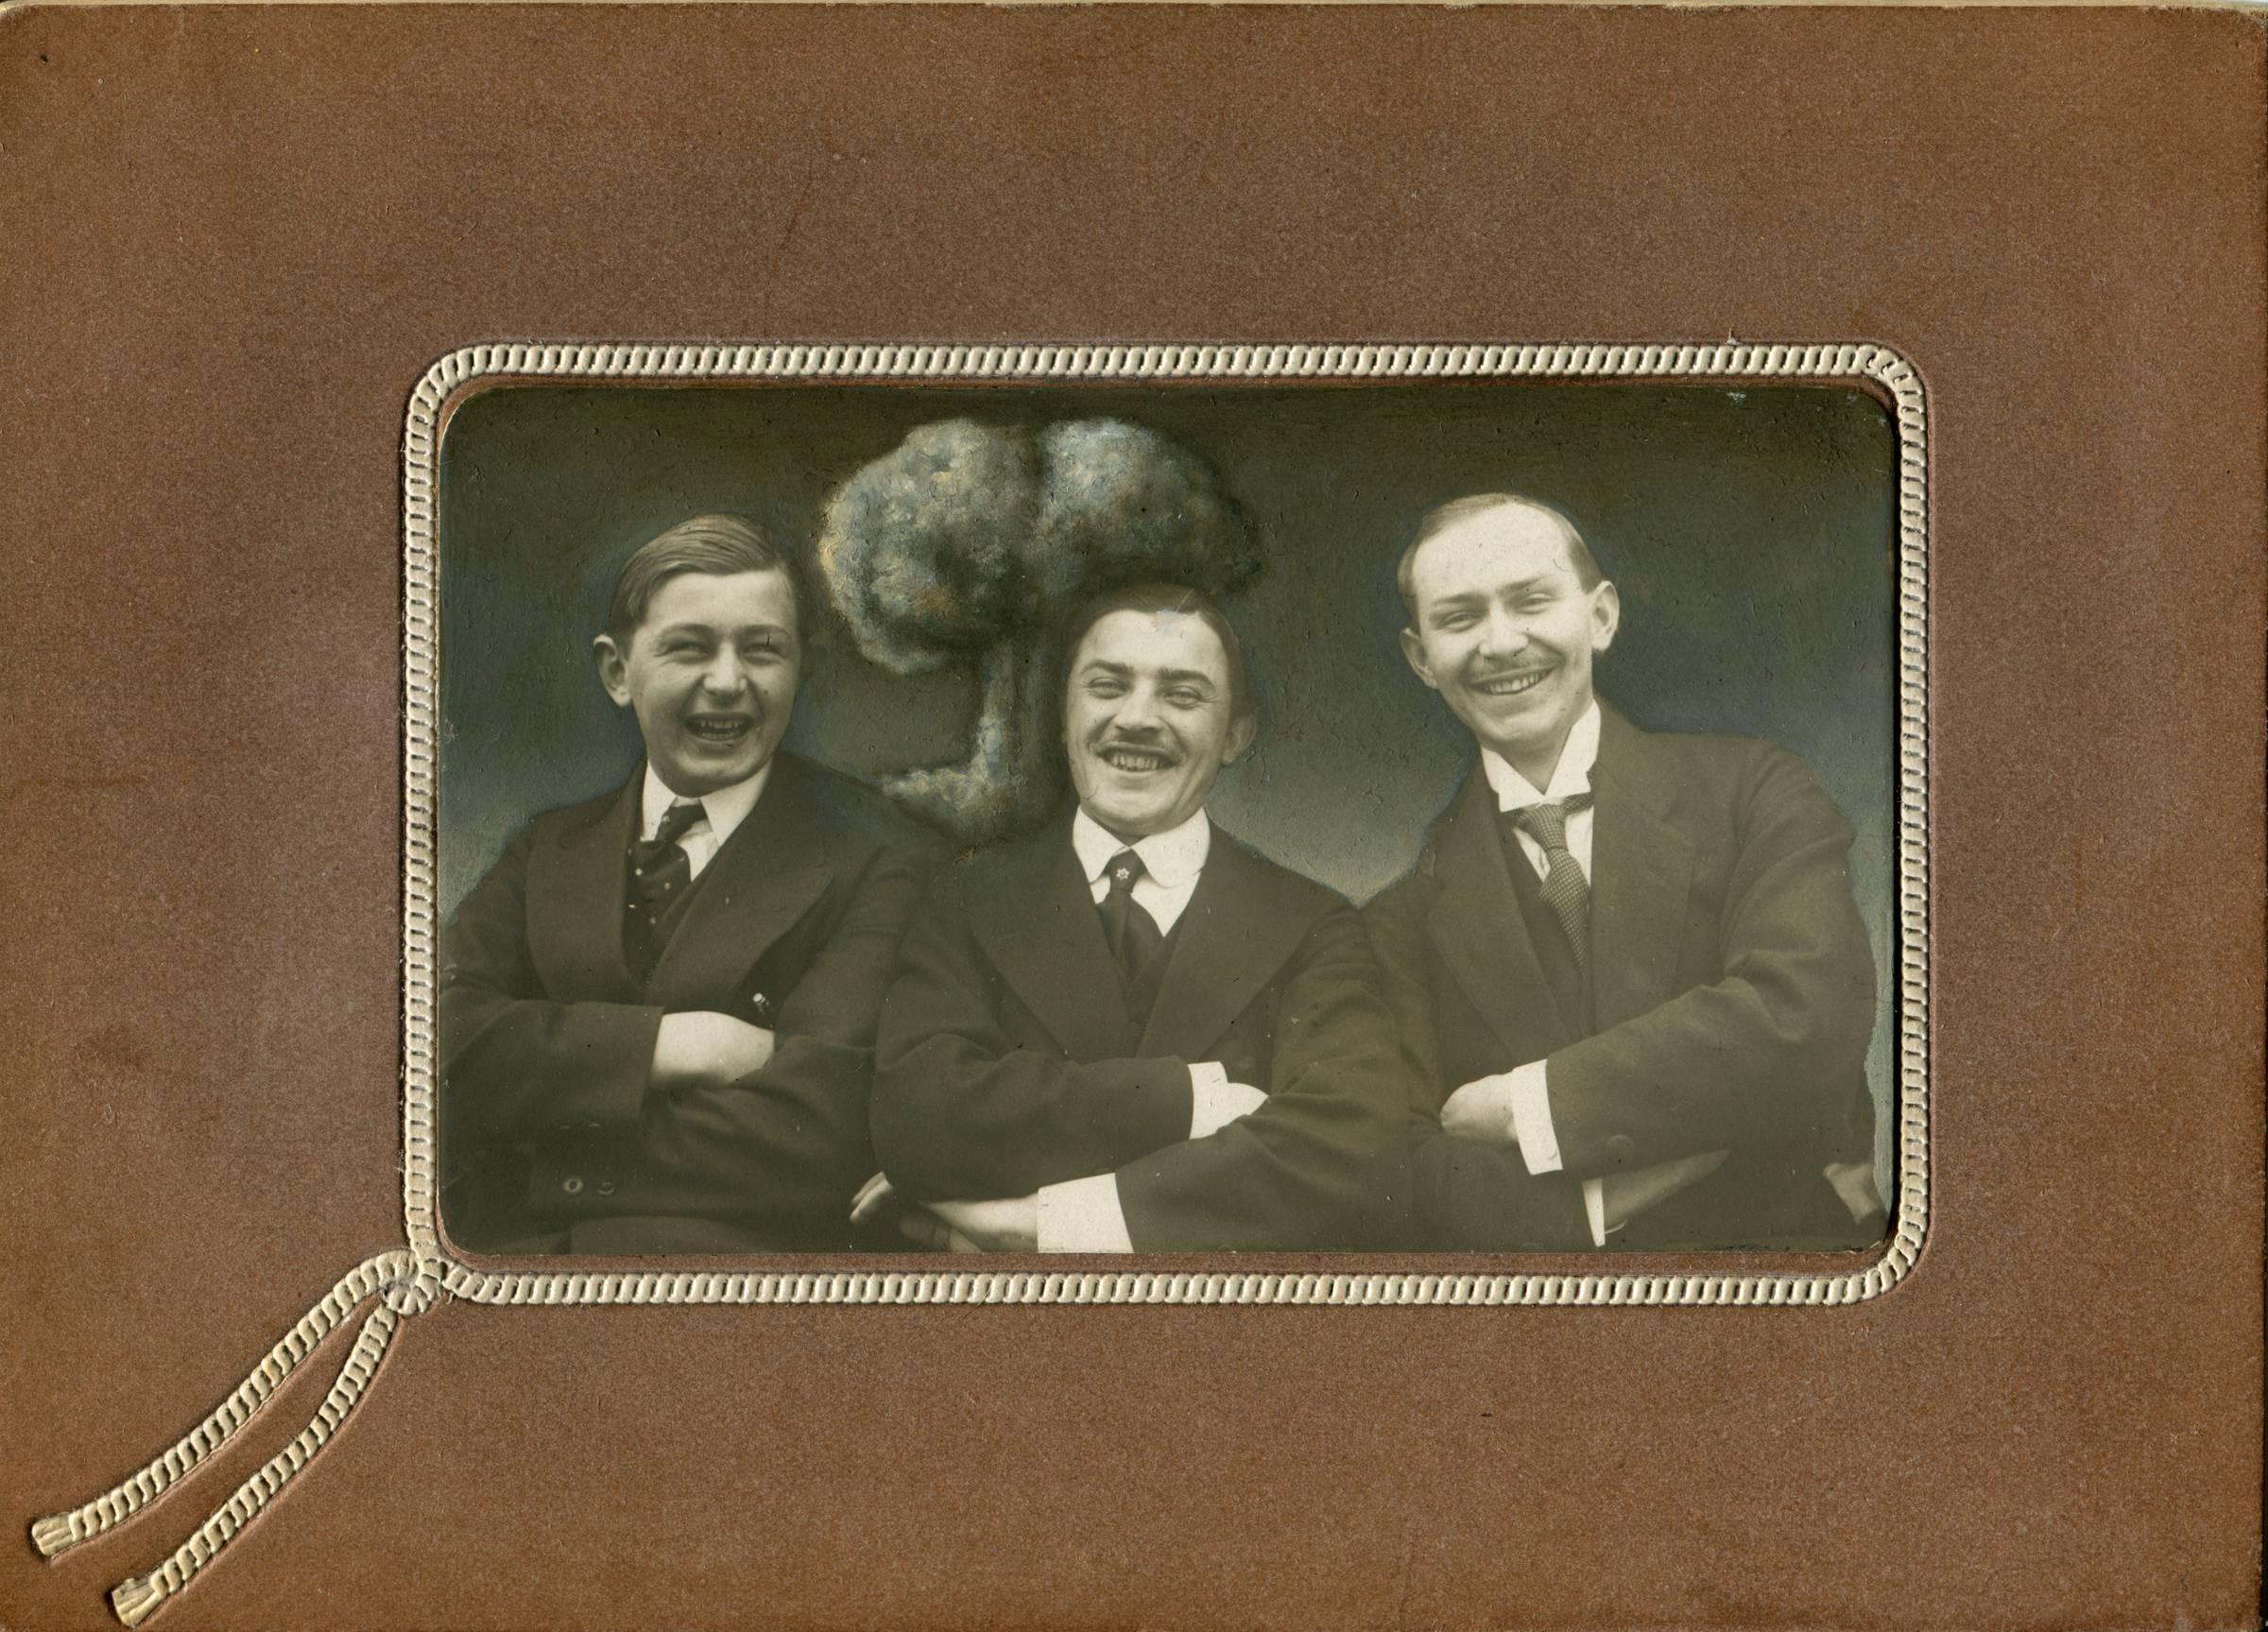 Jana Paleckova Black and White Photograph - Untitled, Portrait of Three Man Smiling with Mushroom Cloud 